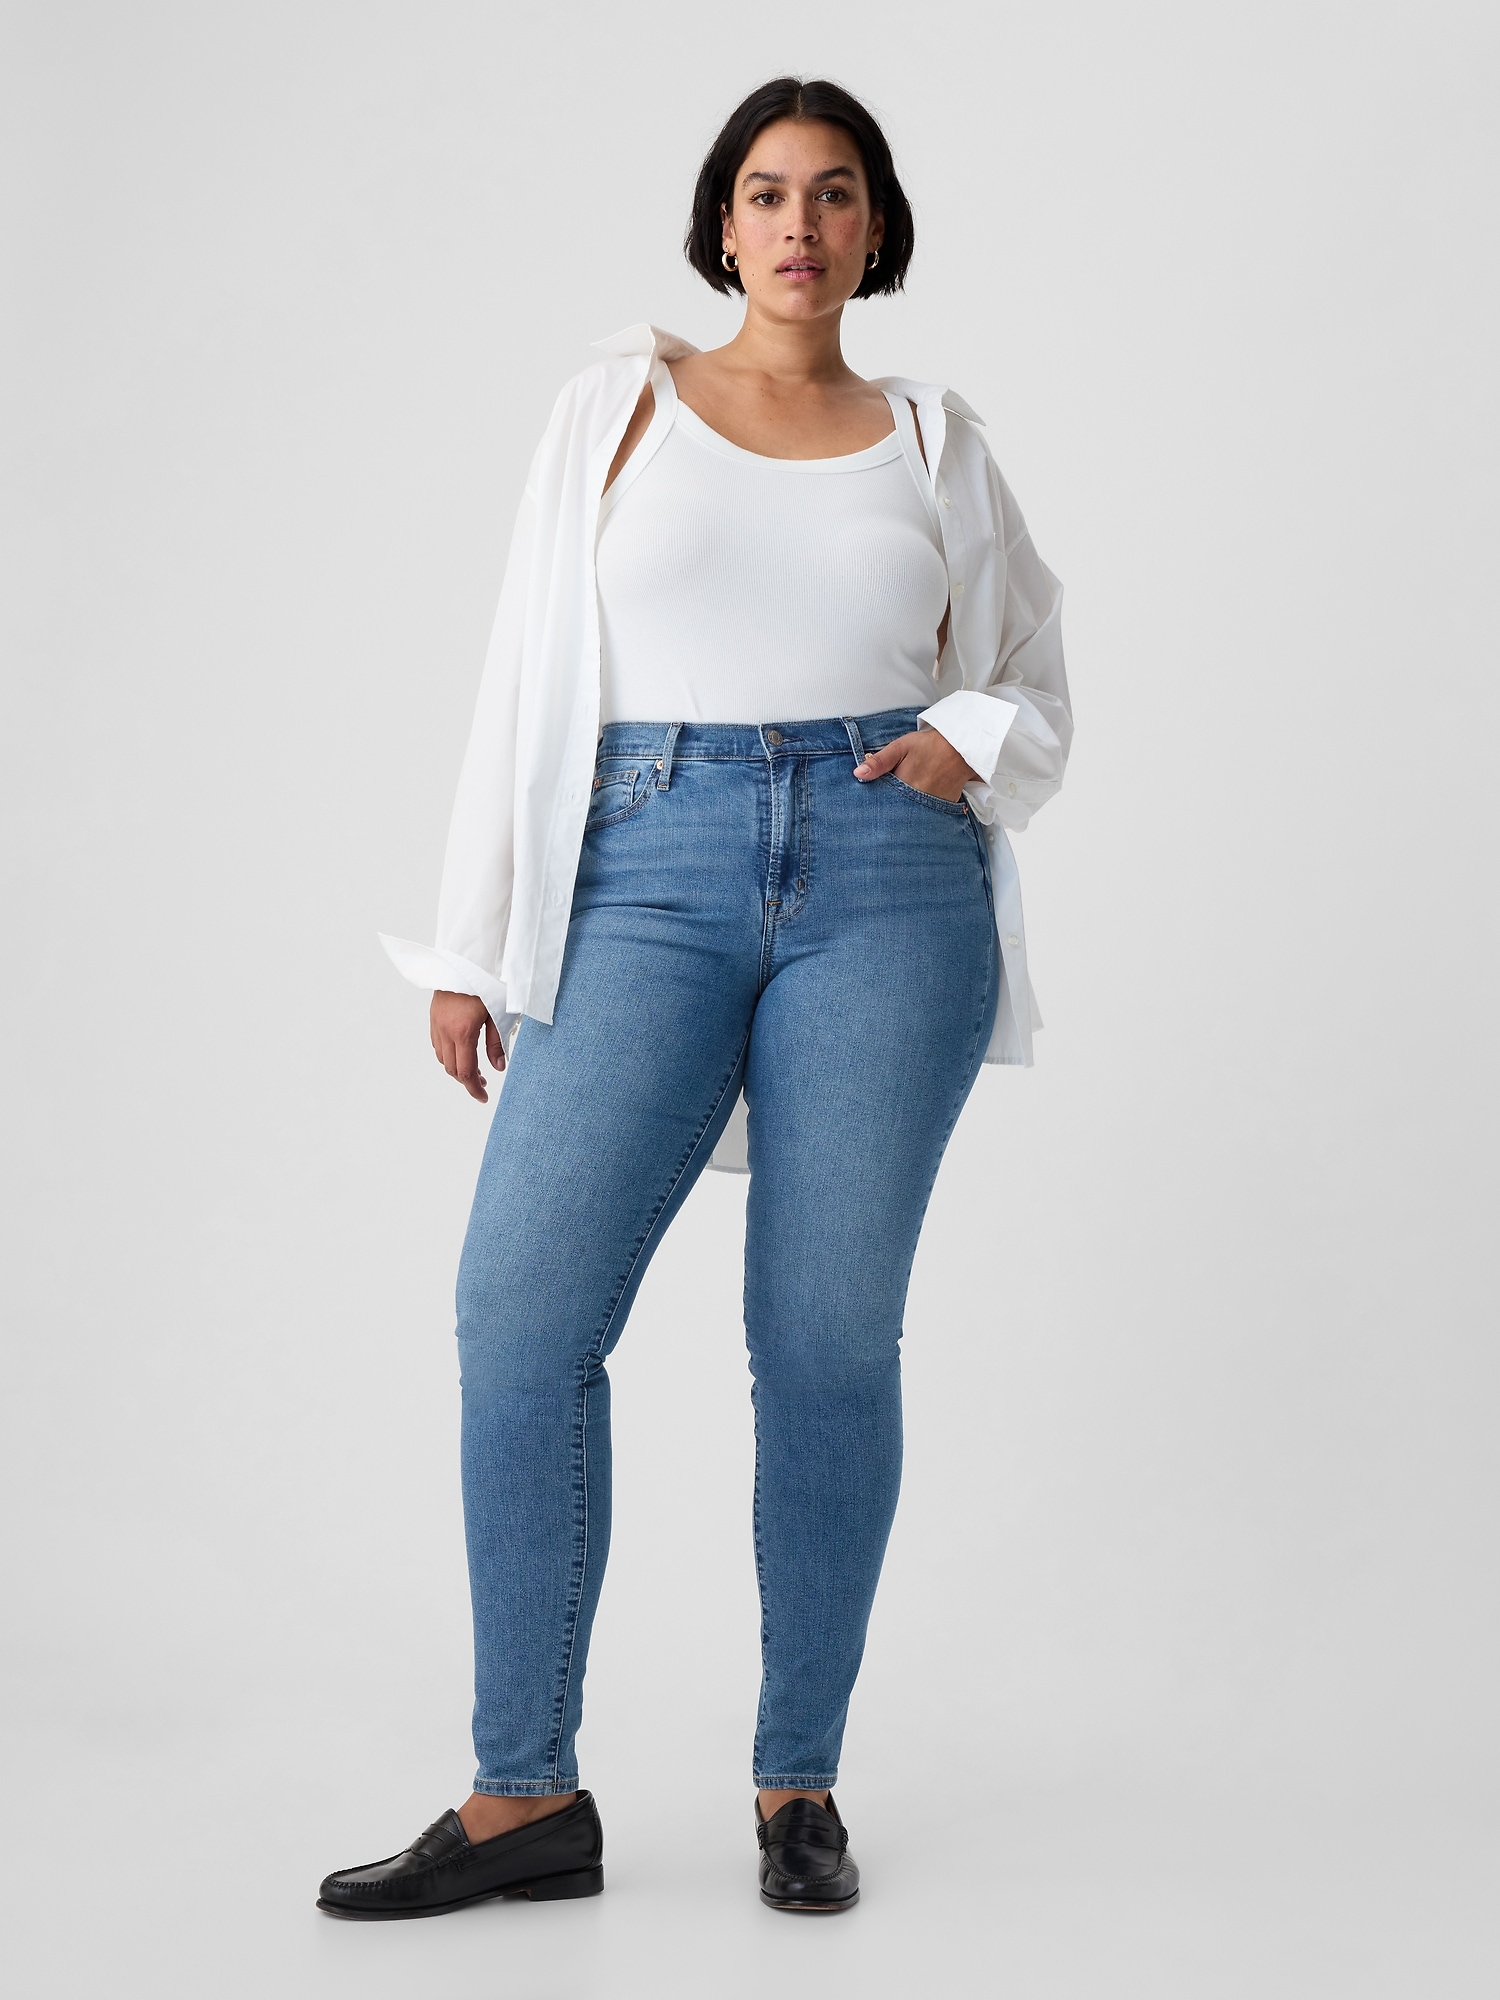 GAP, Jeans, Gap Size 6 True Skinny Distressed Denim Jeans